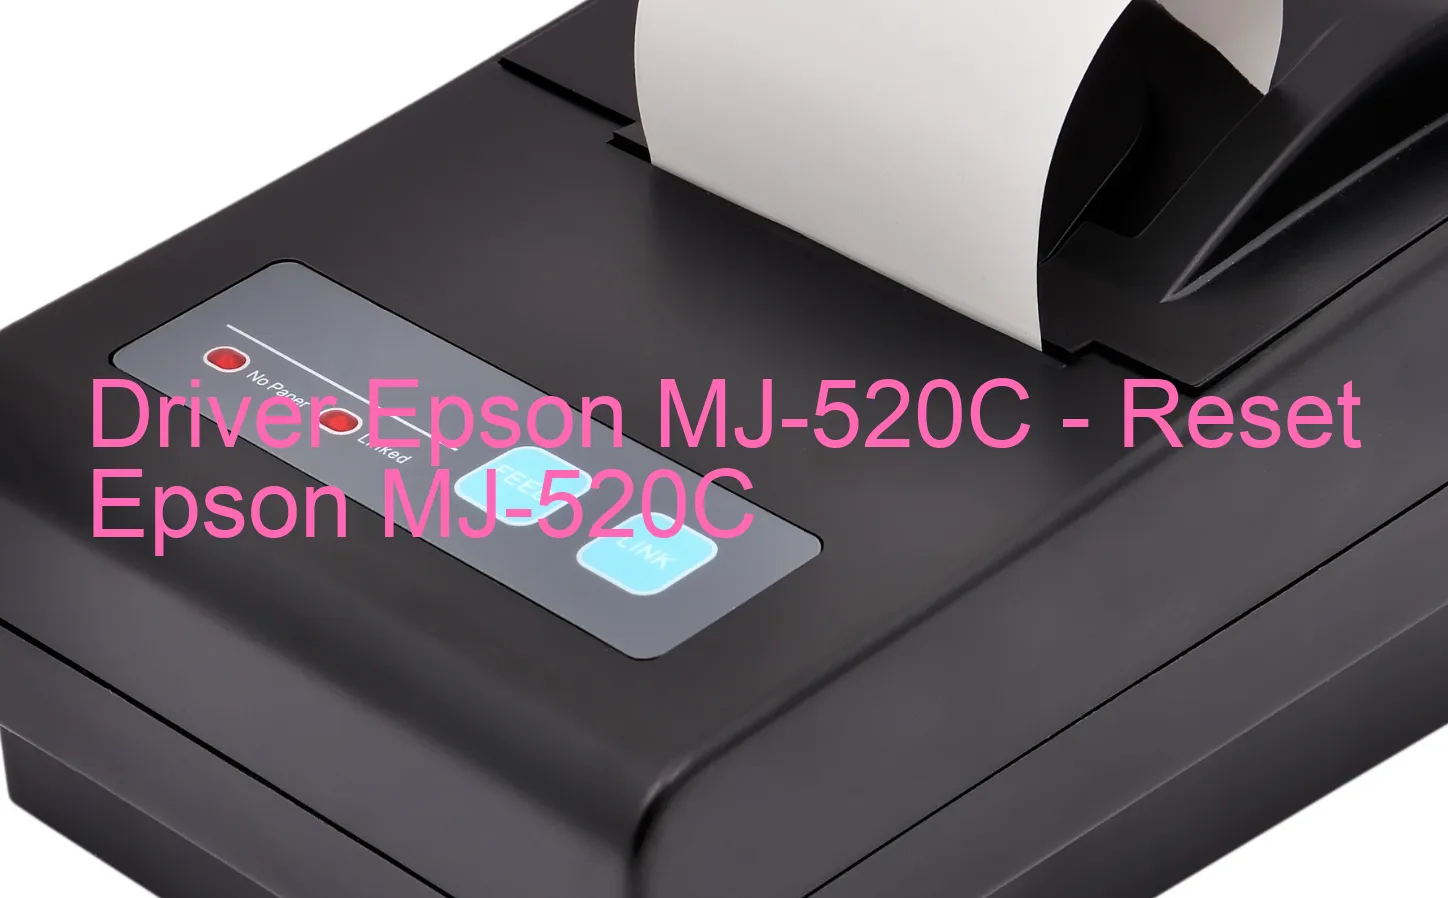 Epson MJ-520Cのドライバー、Epson MJ-520Cのリセットソフトウェア